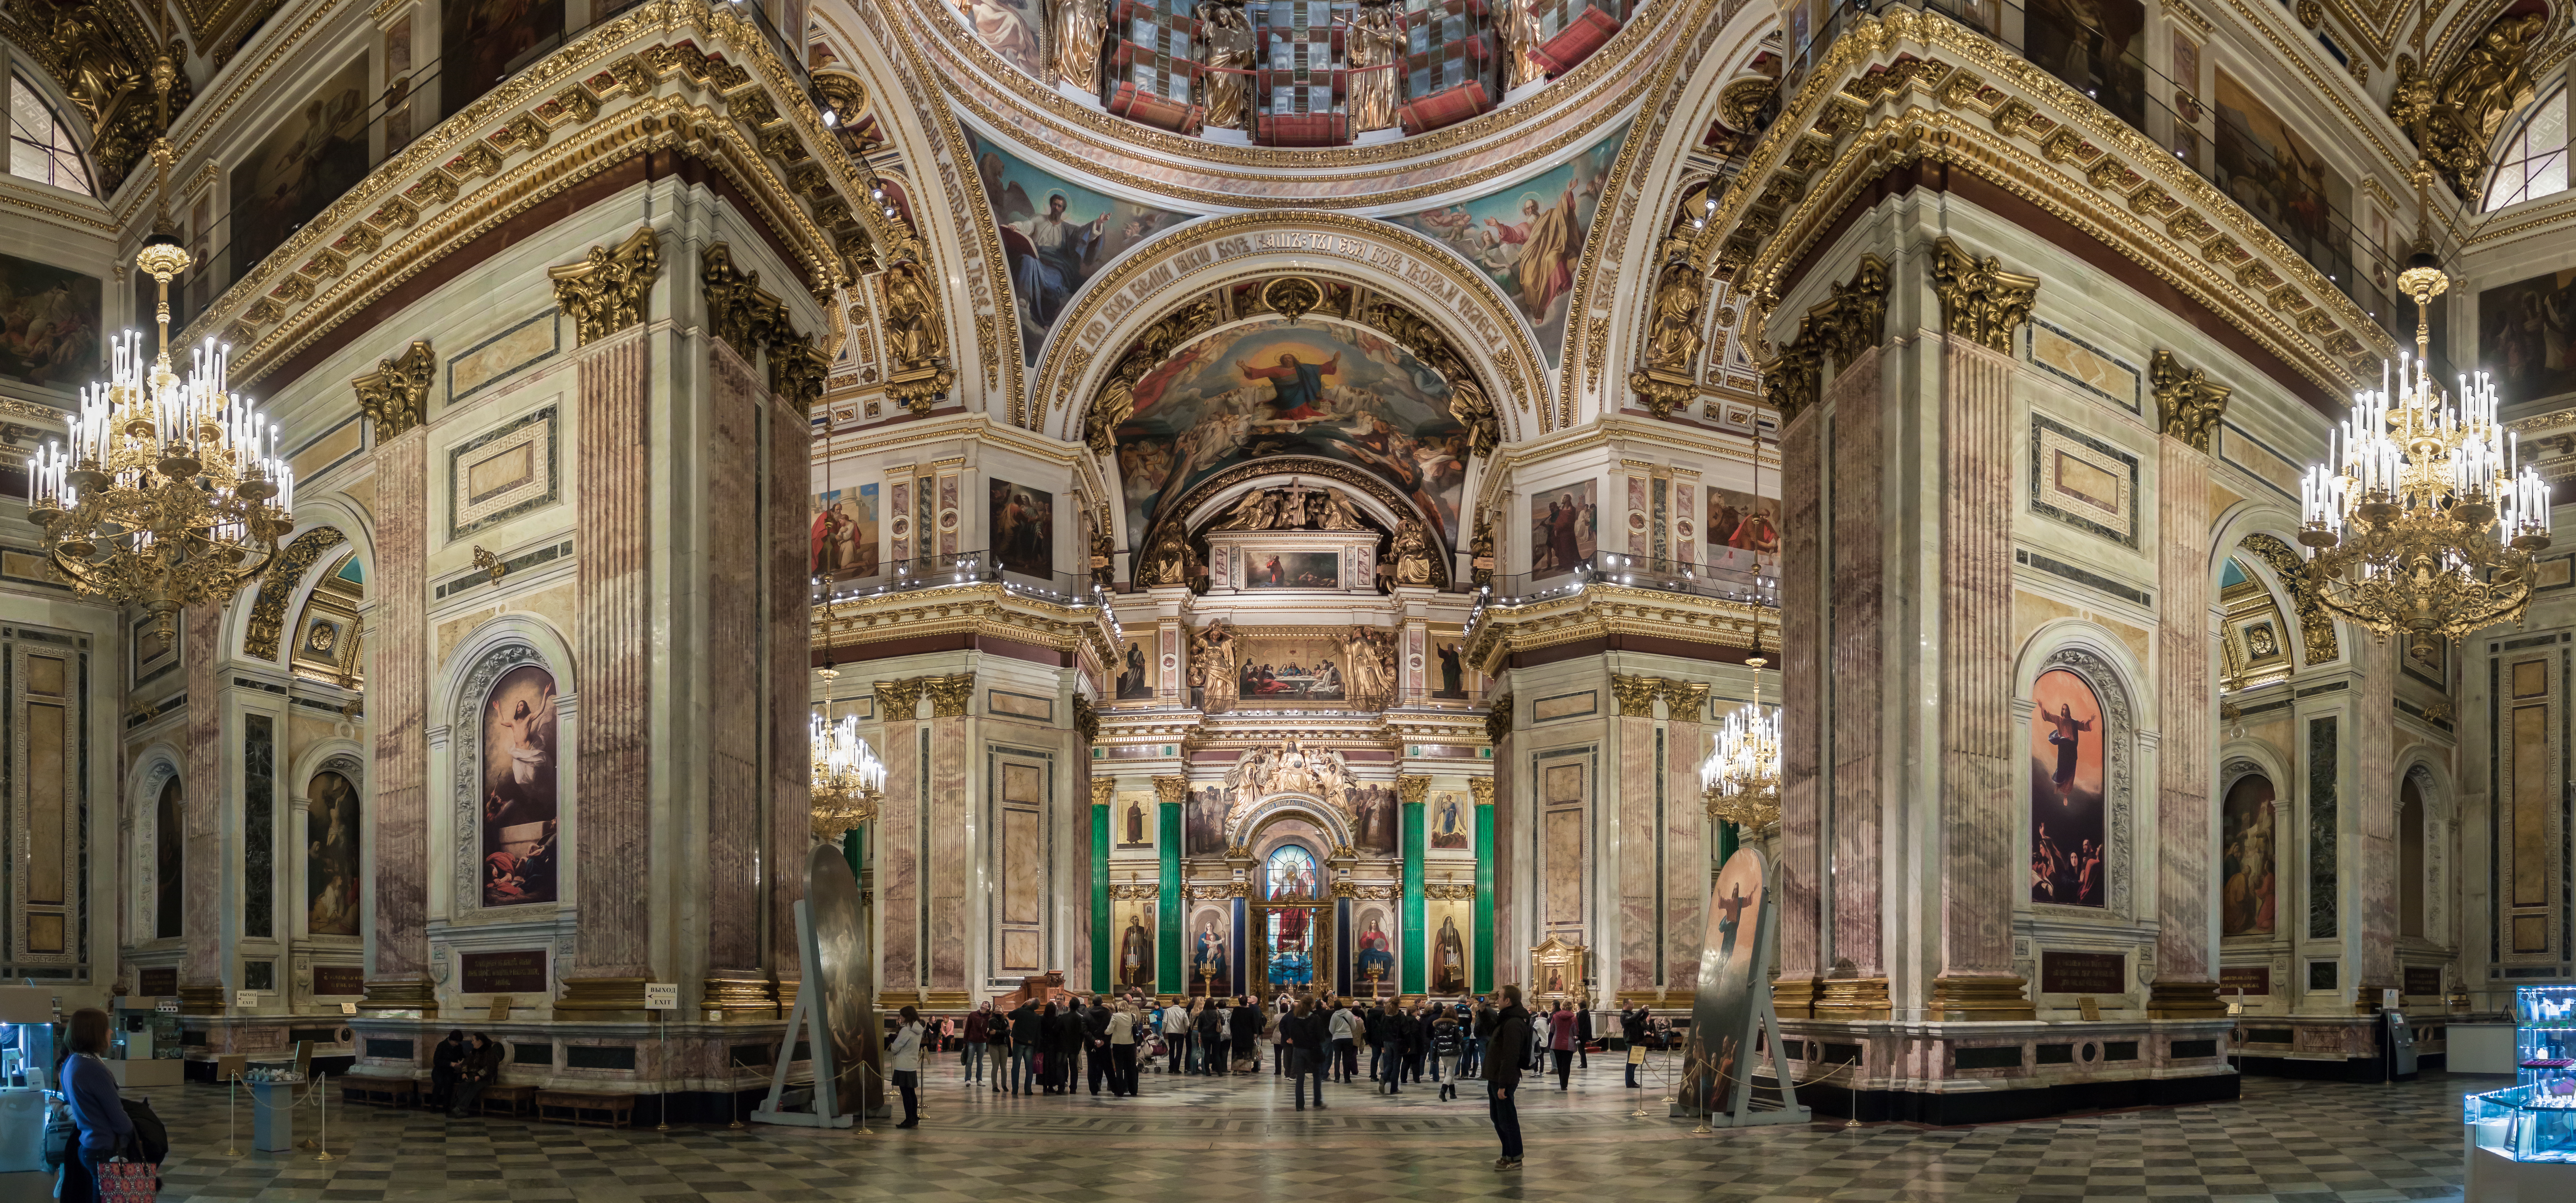 Saint Isaac's Cathedral - Wikipedia